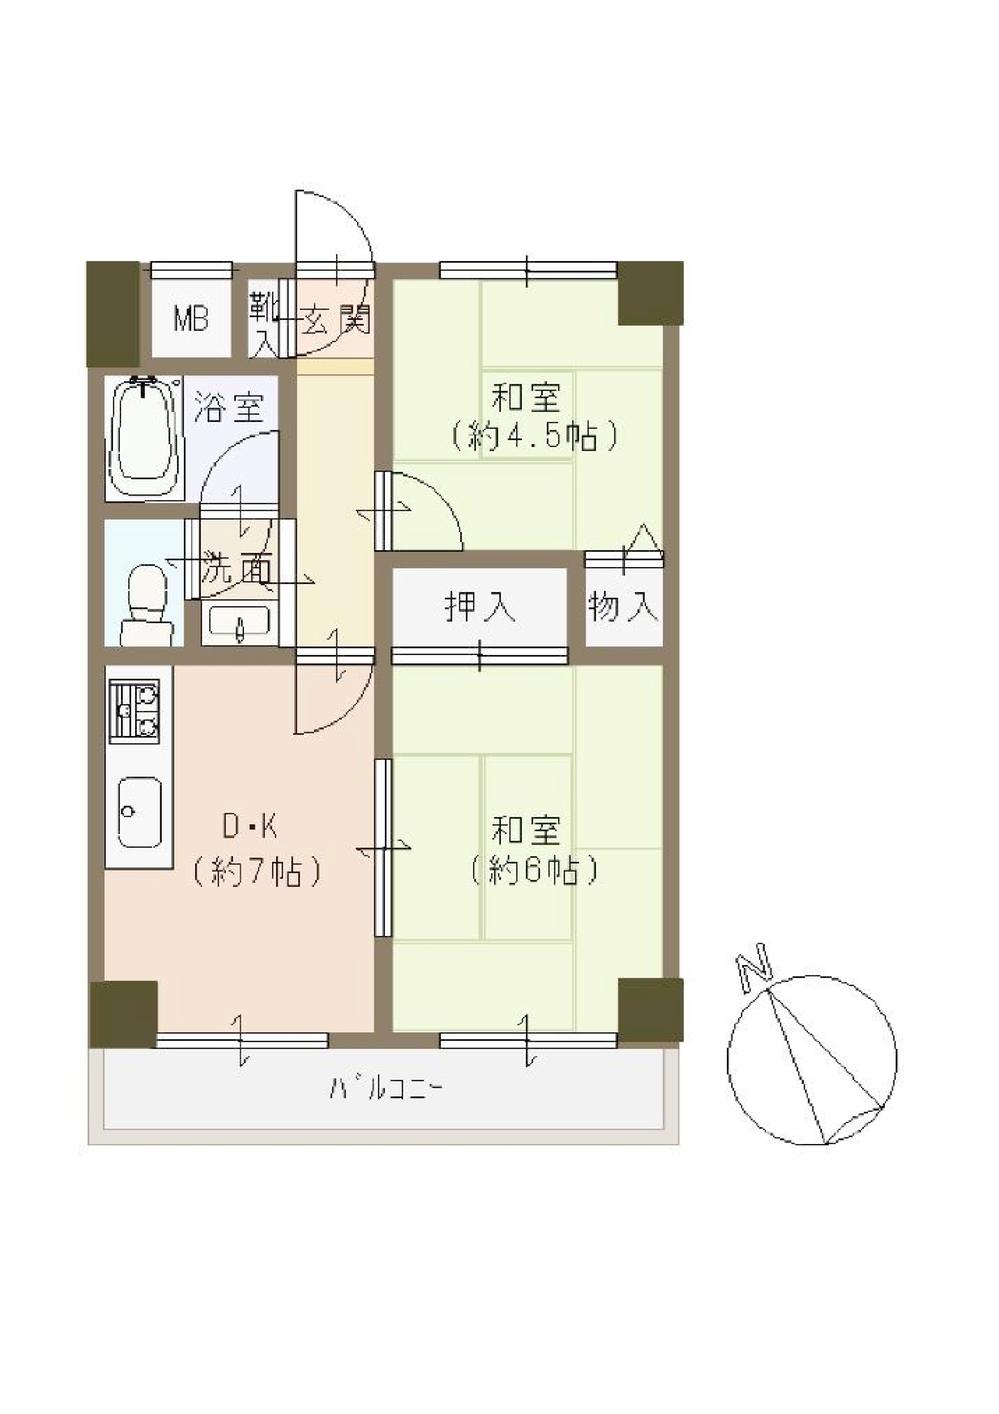 Floor plan. 2DK, Price 5.5 million yen, Occupied area 40.02 sq m , Balcony area 4.8 sq m